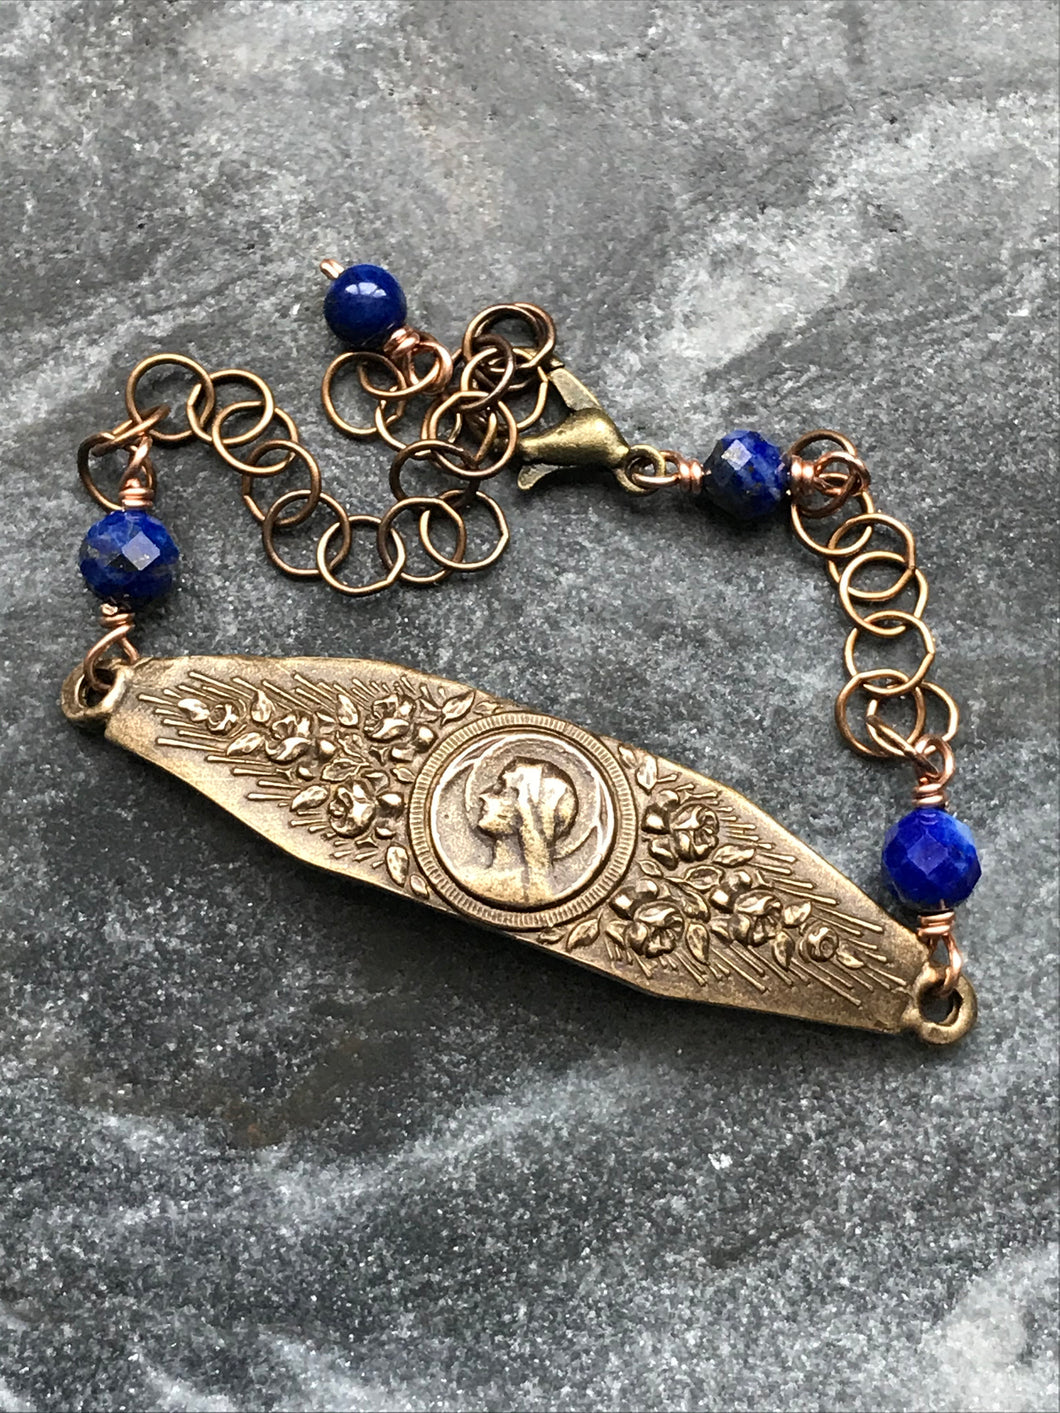 Virgin Mary Bracelet - Lapis Gemstones - Bronze